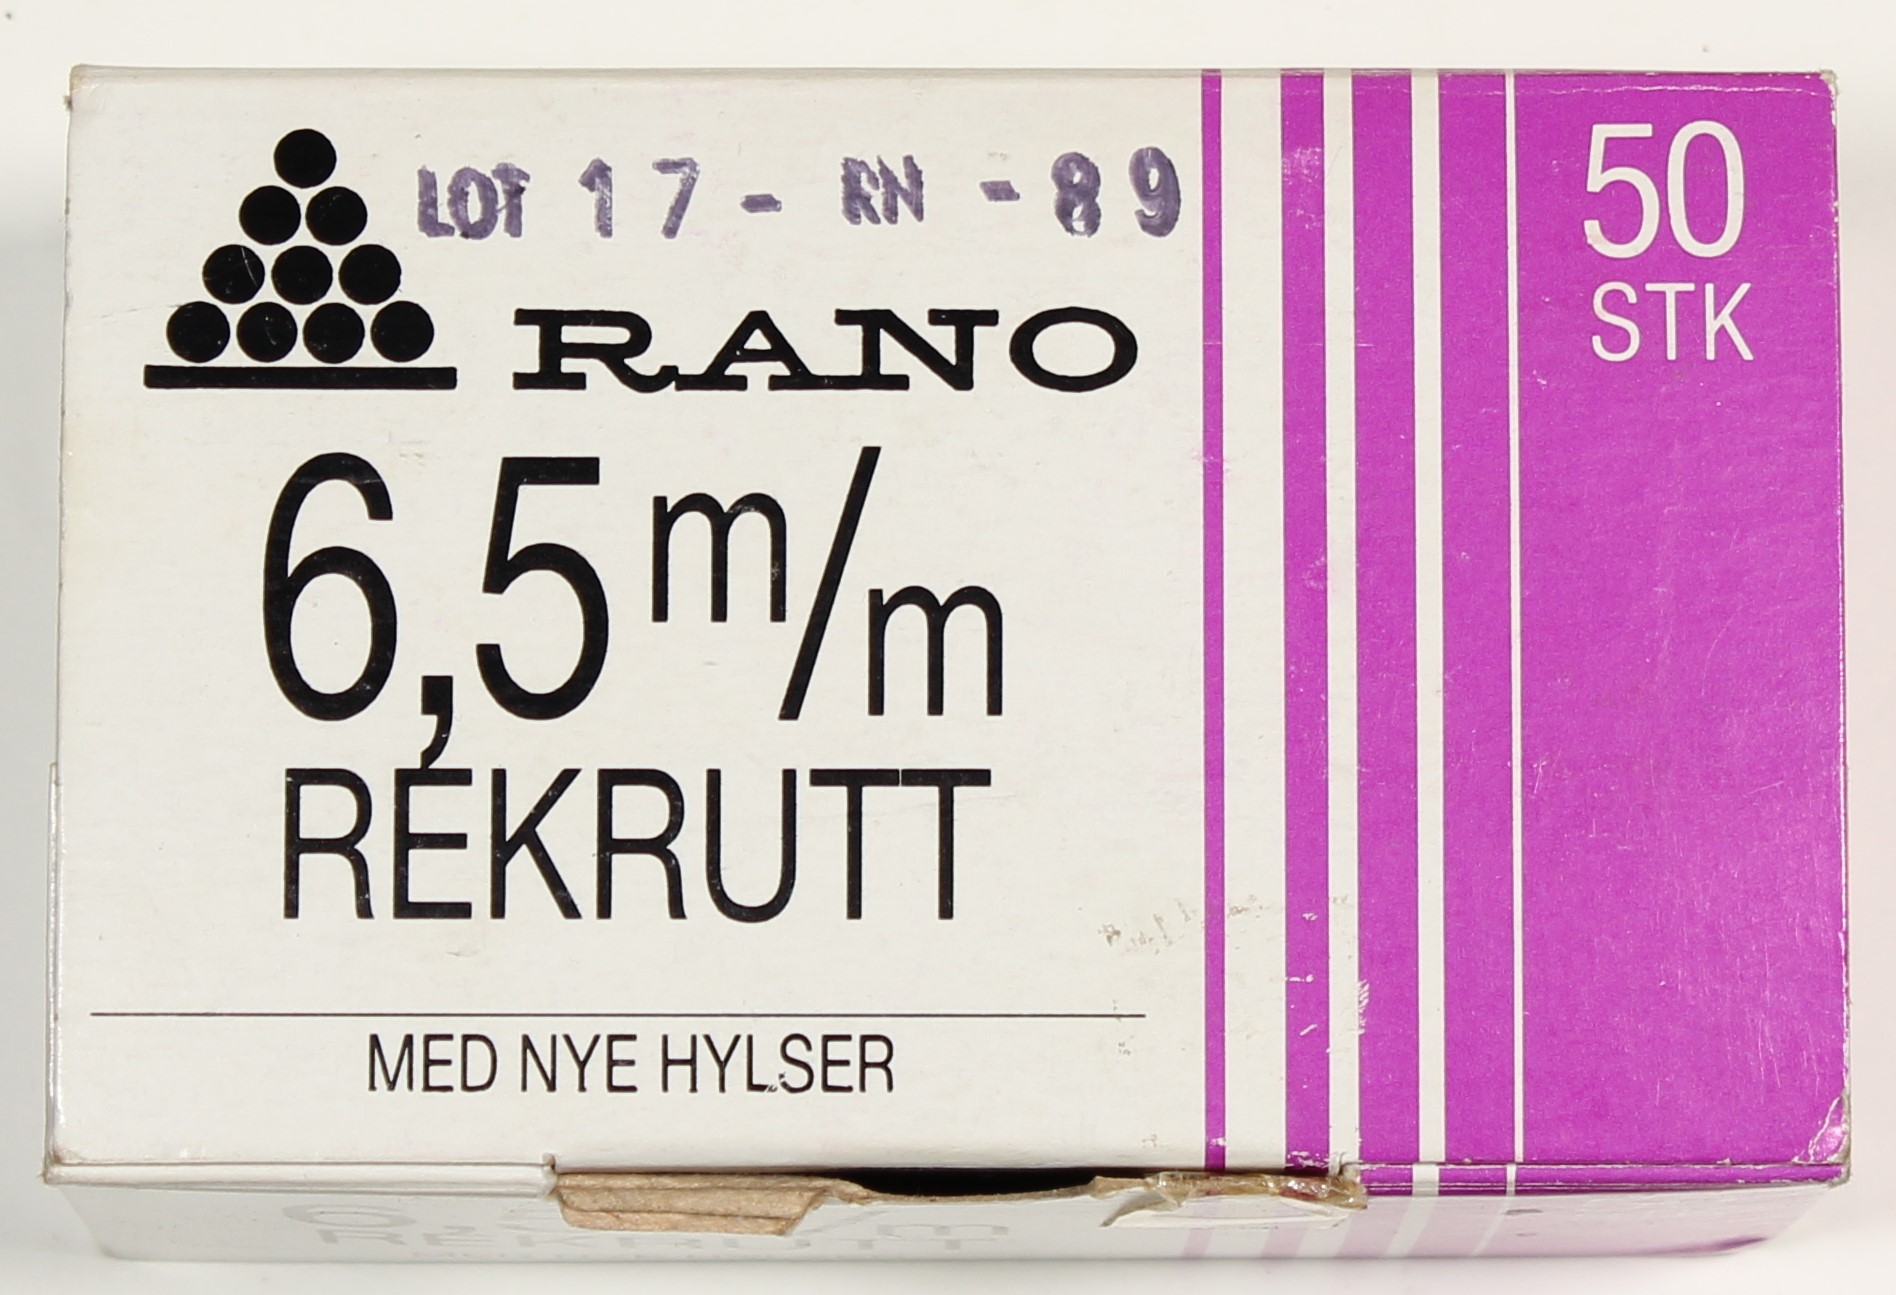 ./ammo/65x55/esker/Eske-65x55-RANO-50skudd-Helmantel-Rekrutt-Nye-17-RN-89-1.jpg